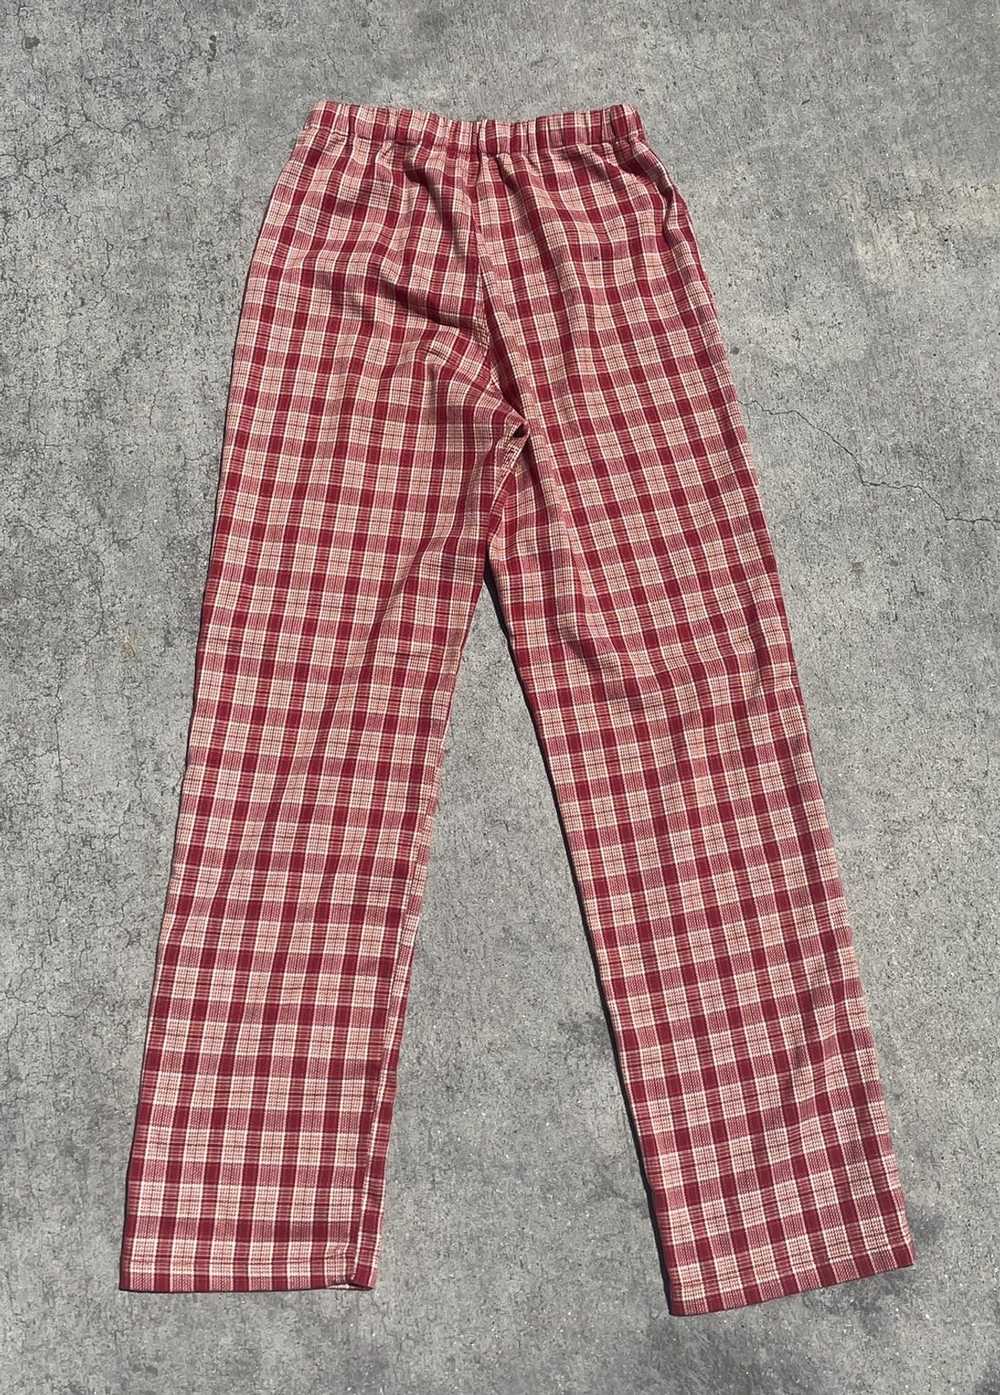 Streetwear Brandy Melville Red Plaid Tilden Pants - image 2